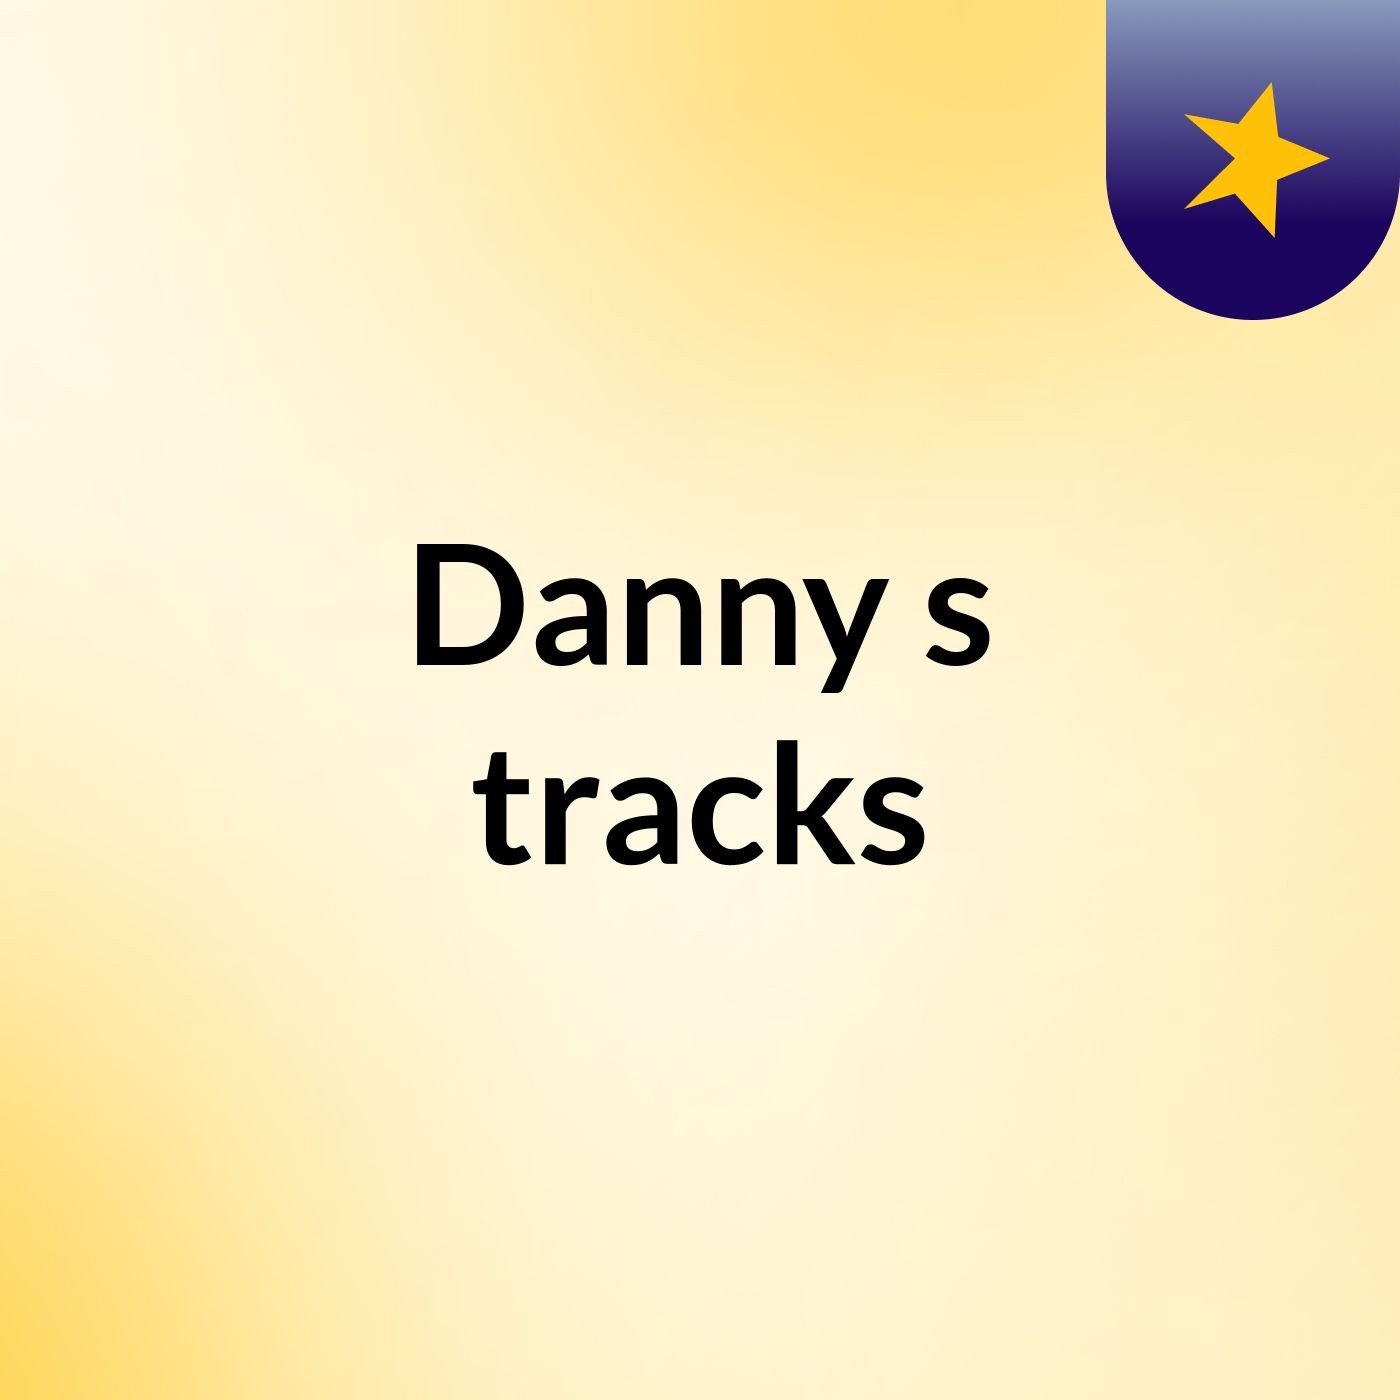 Danny's tracks